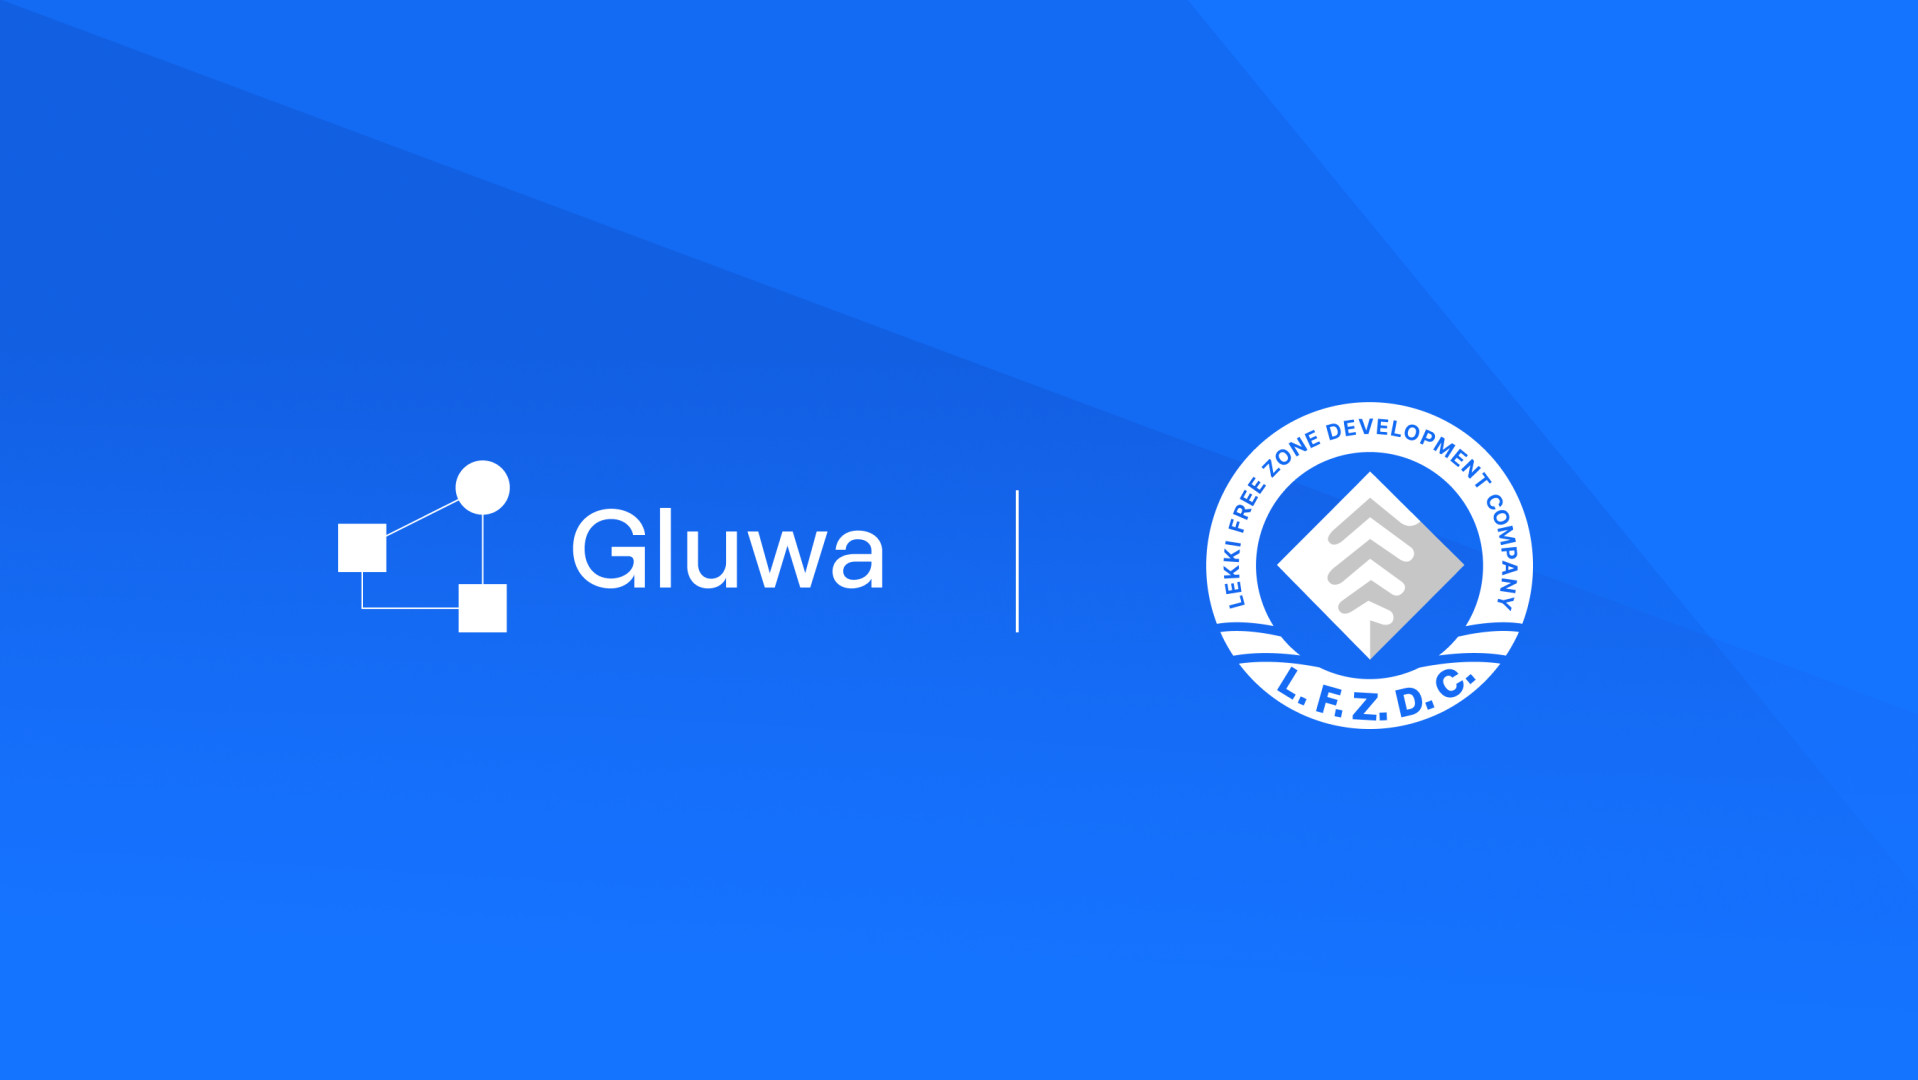  blockchain lekki gluwa technology partner free zone 